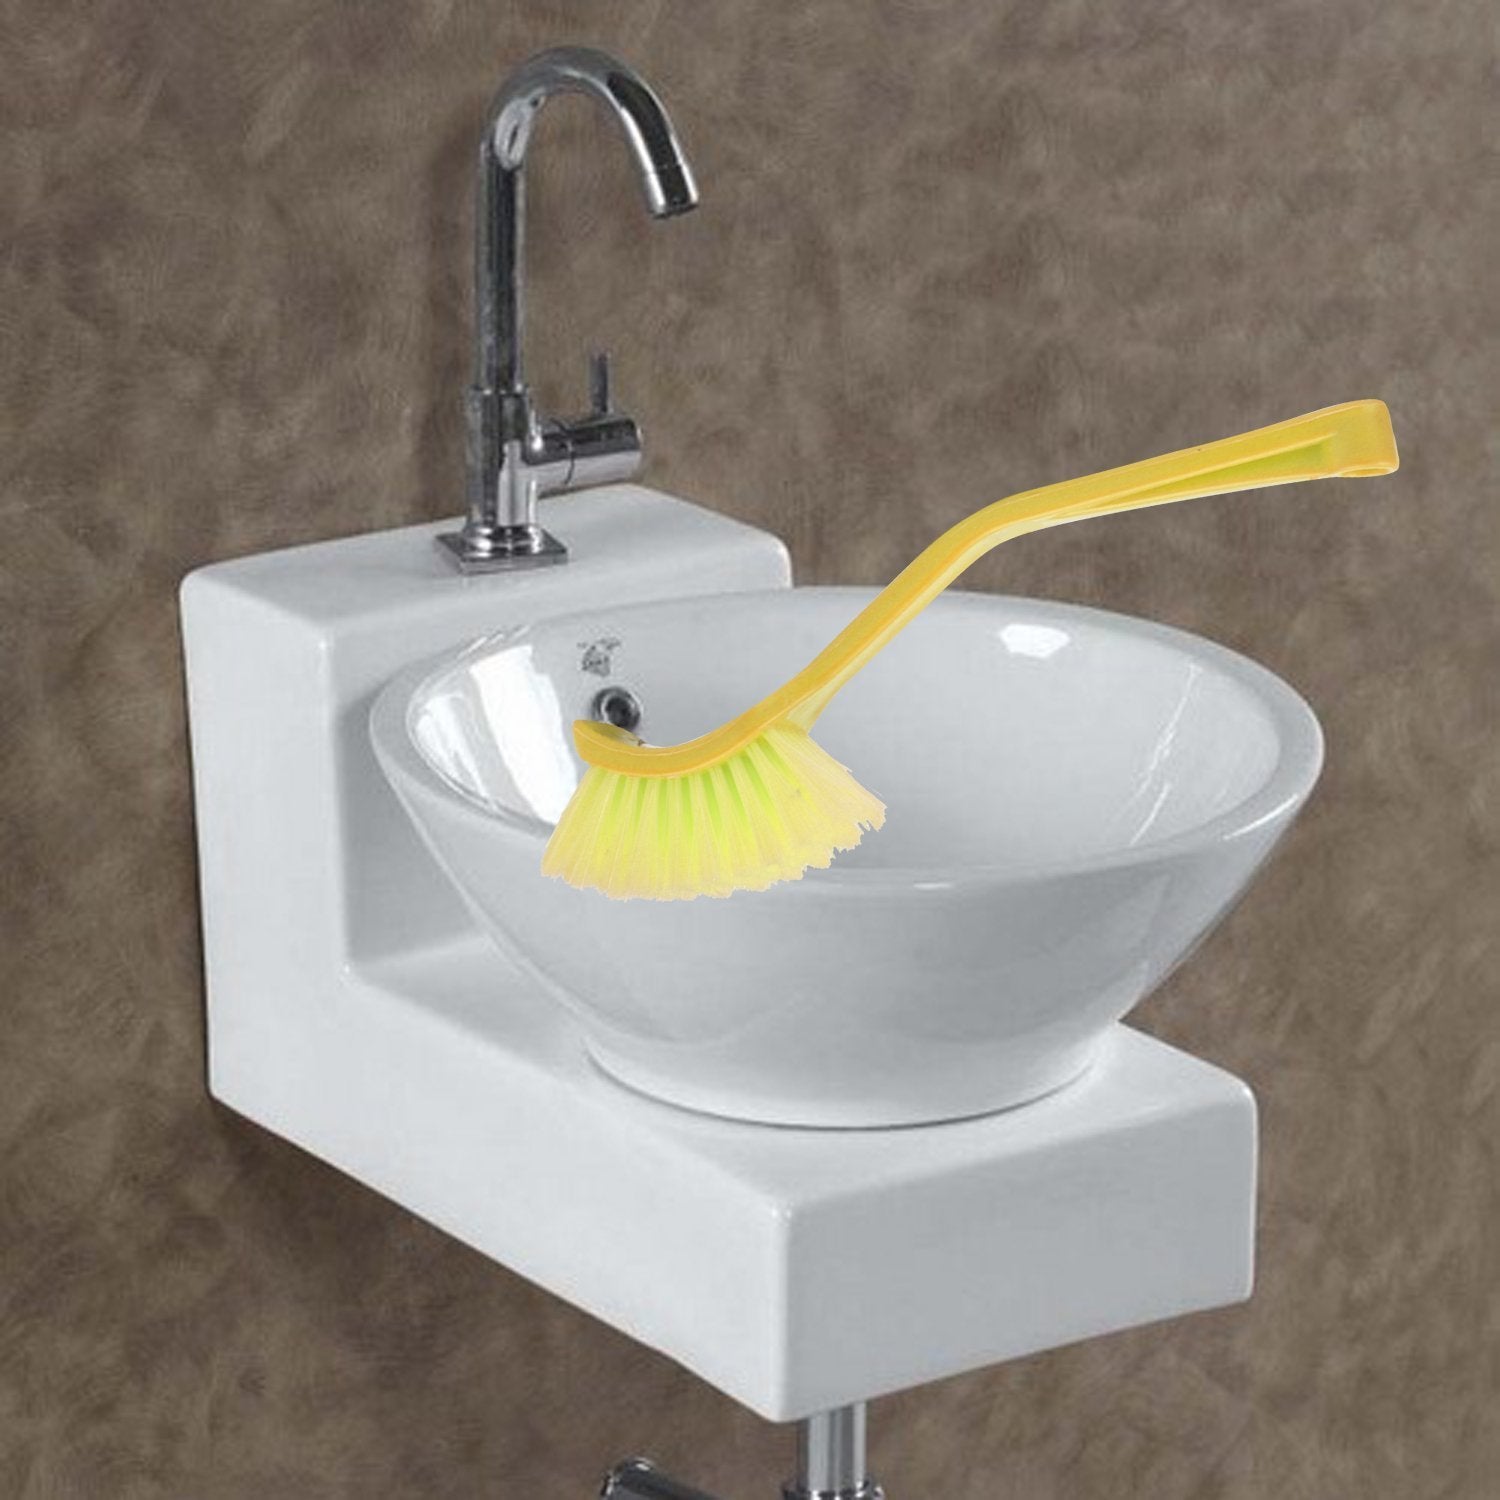 1345 plastic wash basin toilet seat cleaning brush multicolour